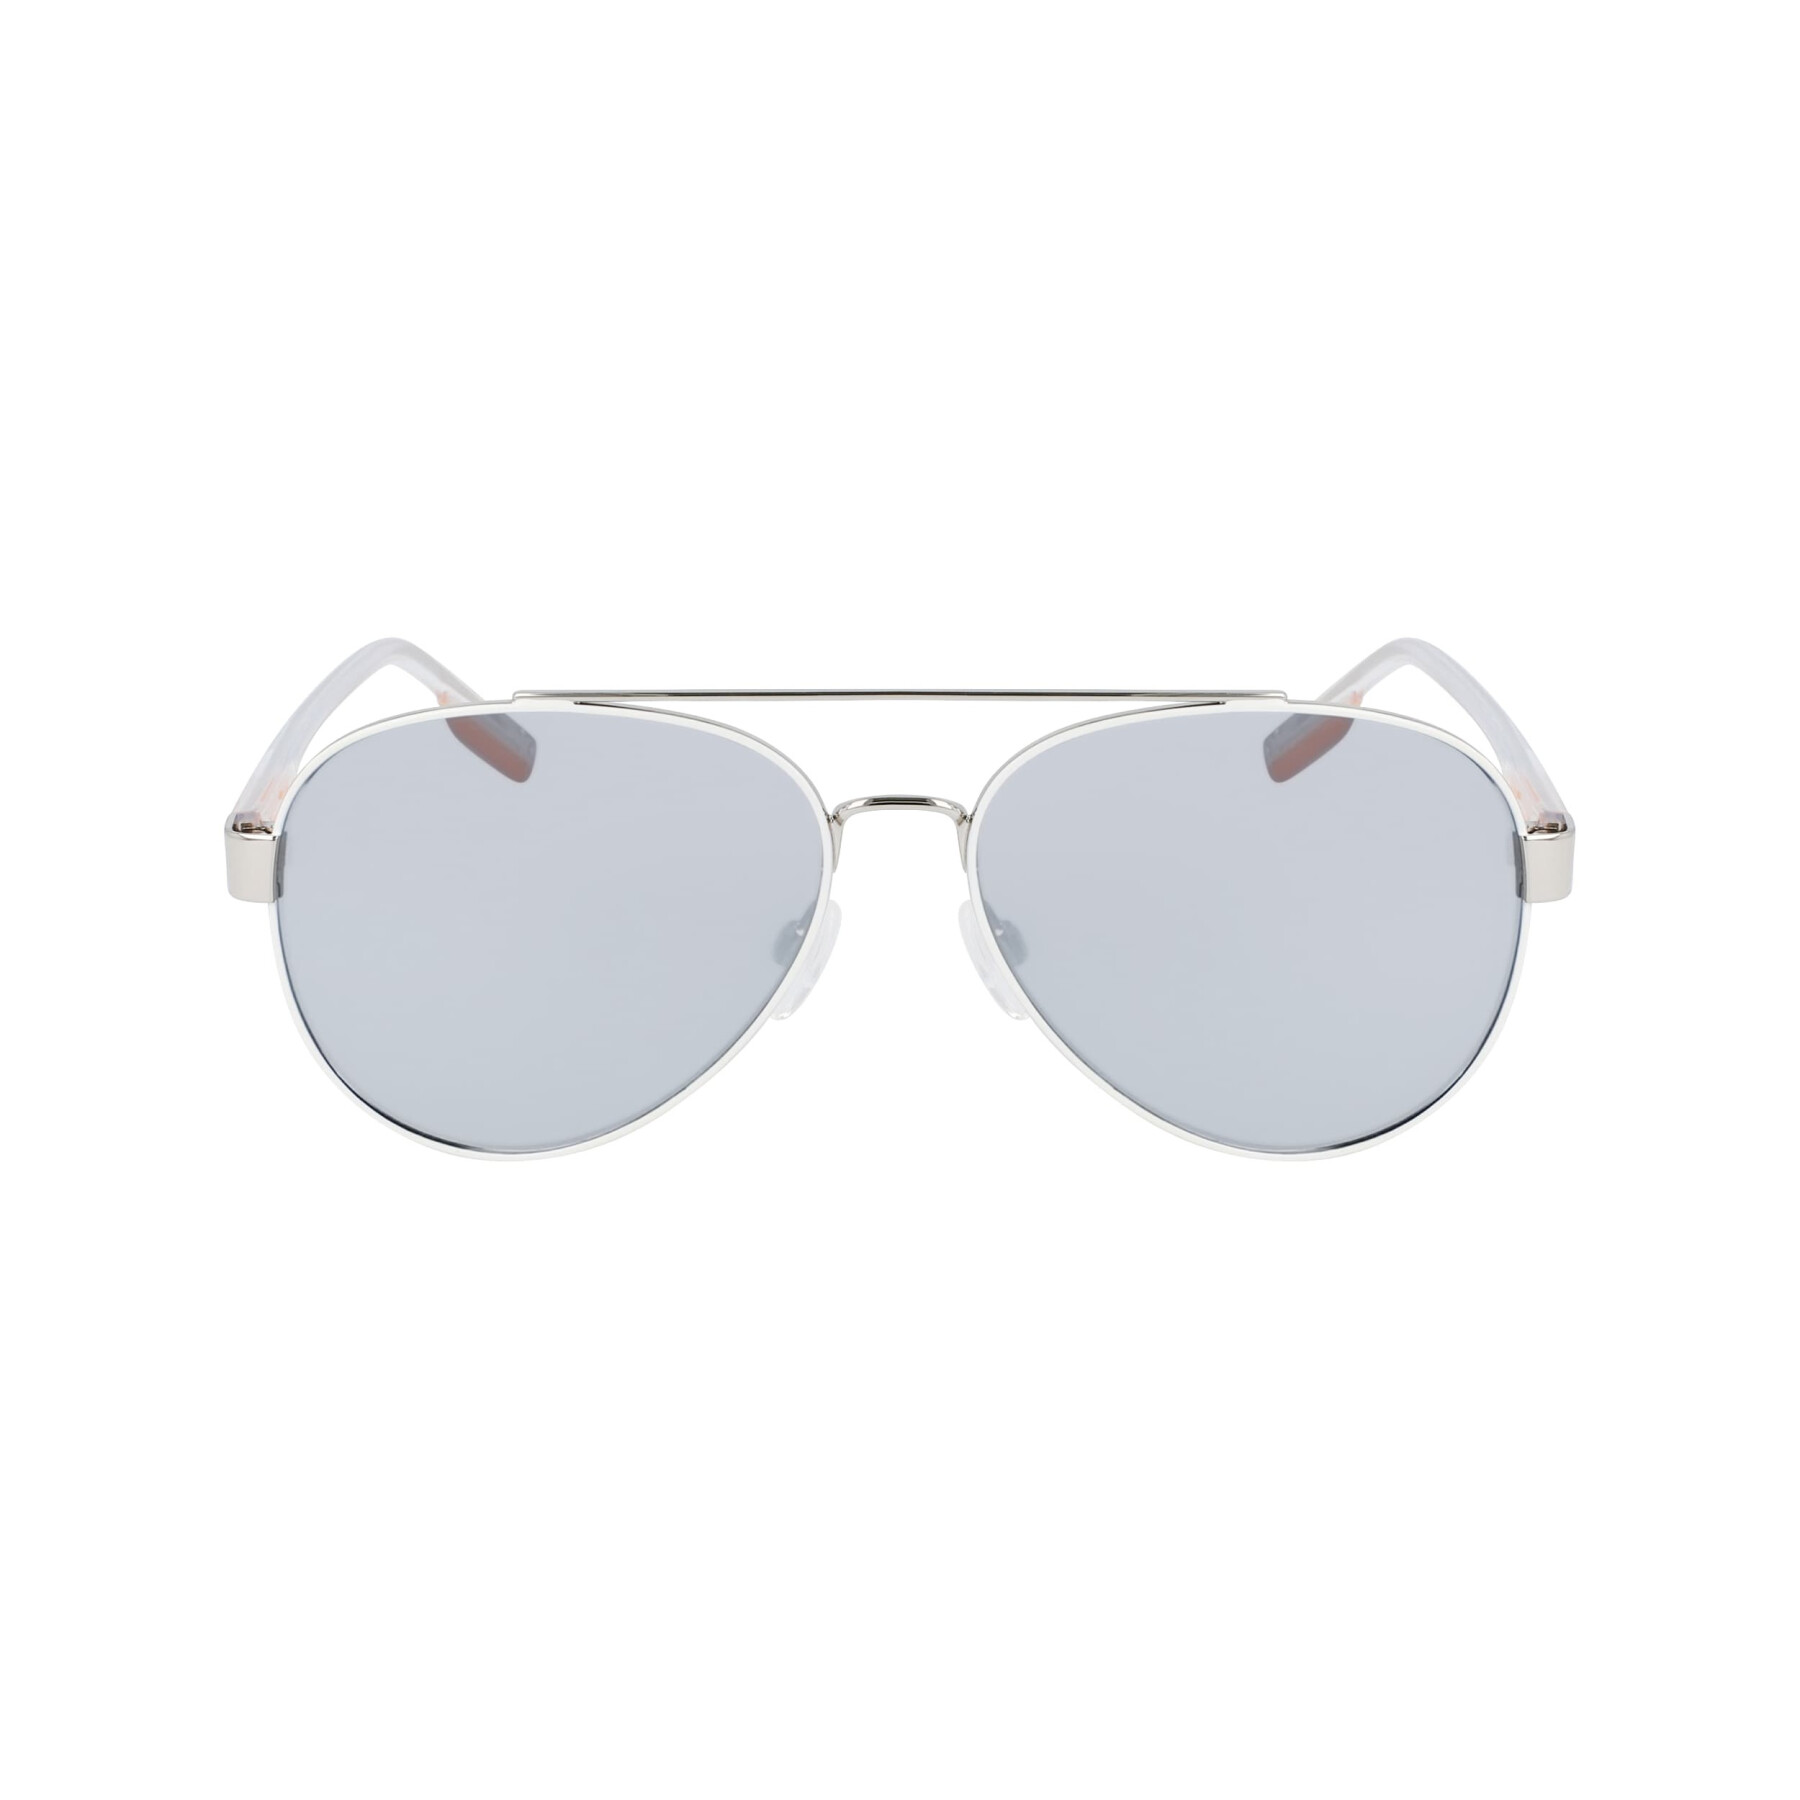 Sunglasses Converse CV300SDISR100